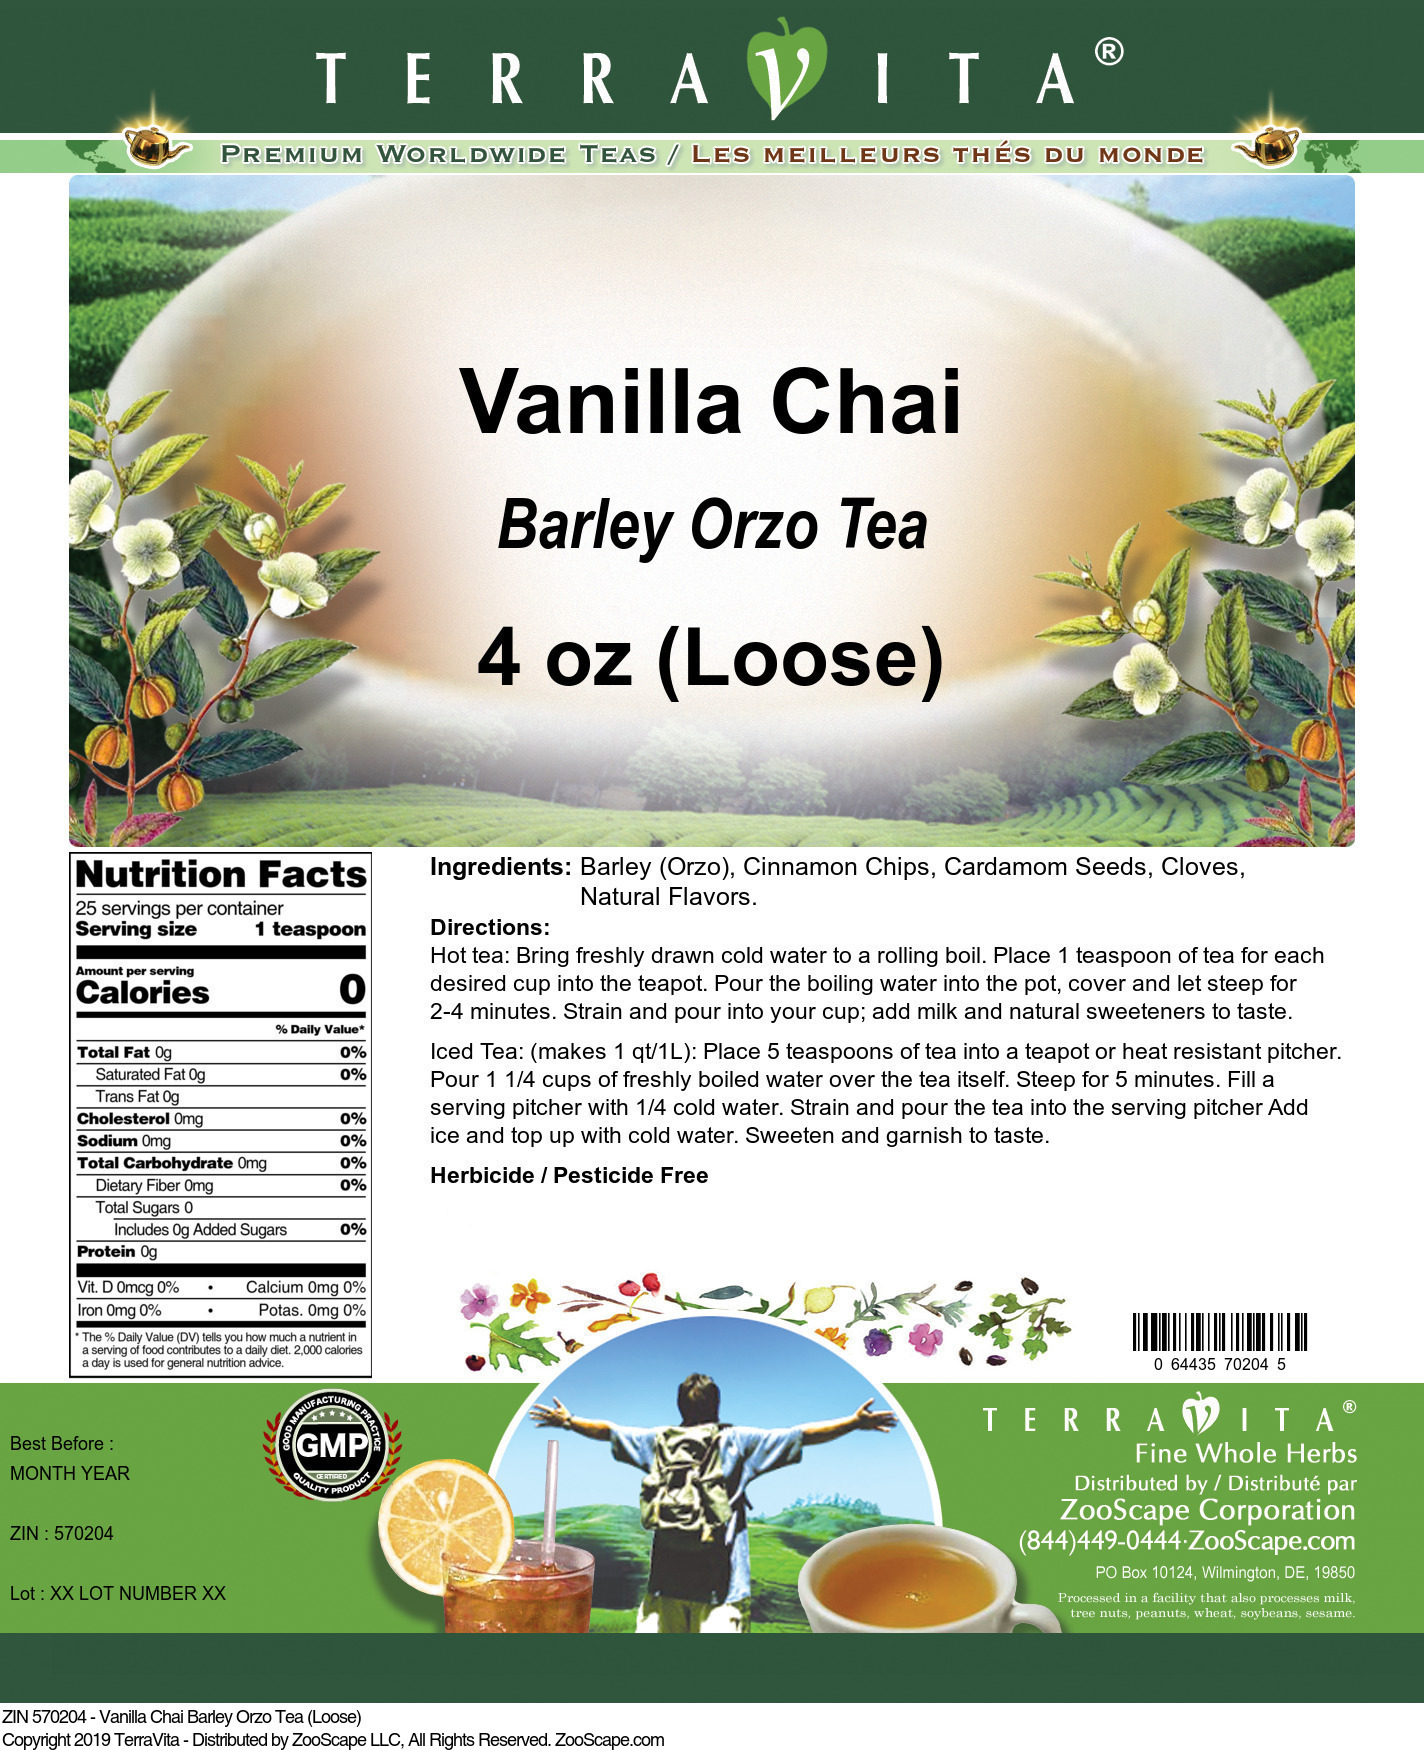 Vanilla Chai Barley Orzo Tea (Loose) - Label